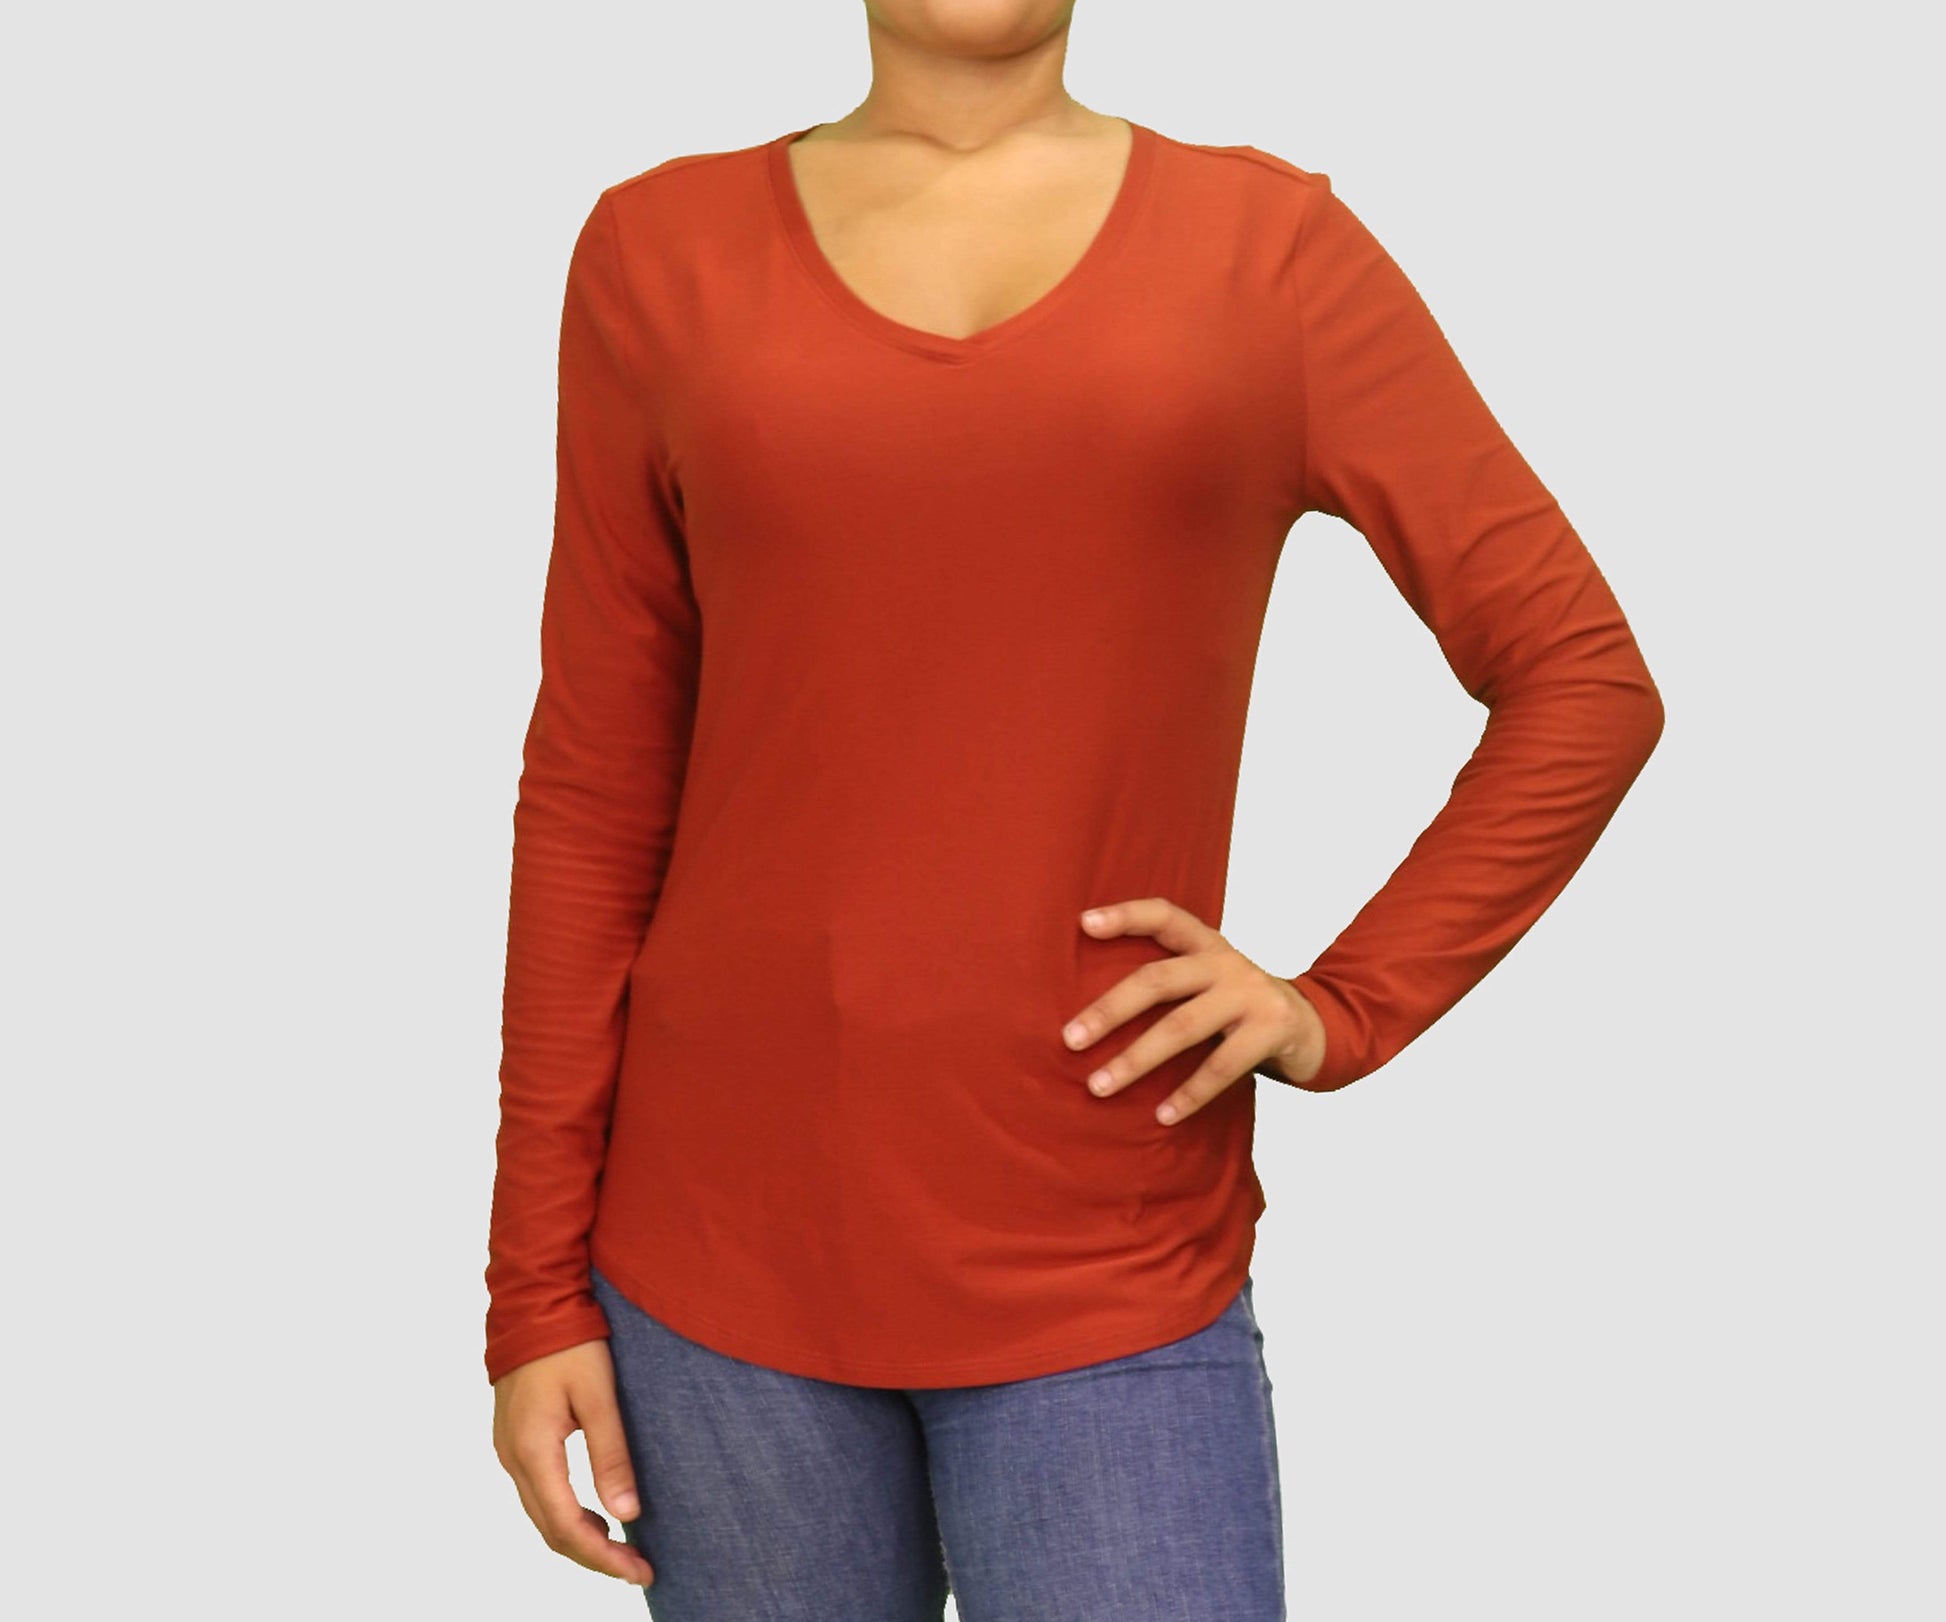 No Boundaries Womens Tops Medium - Large / Rust Orange Long Sleeve Top